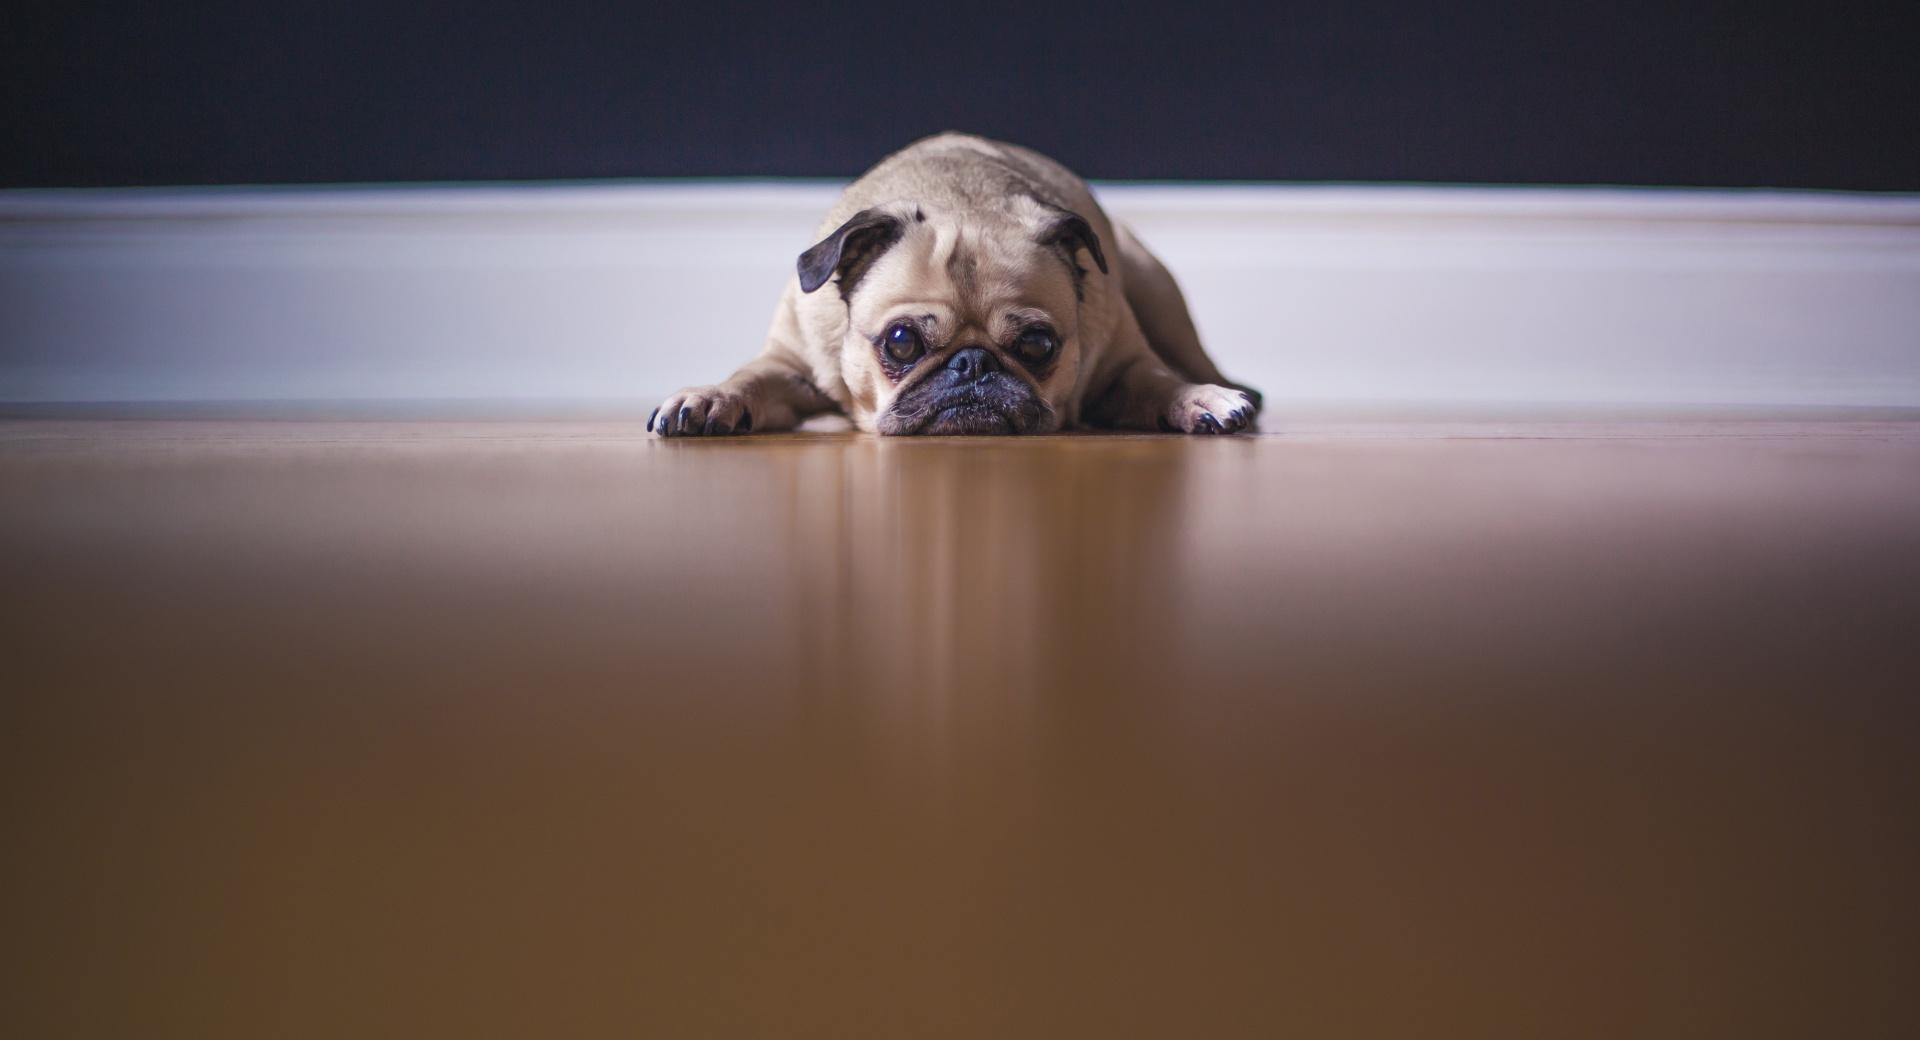 Saddest Pug Dog at 1280 x 960 size wallpapers HD quality